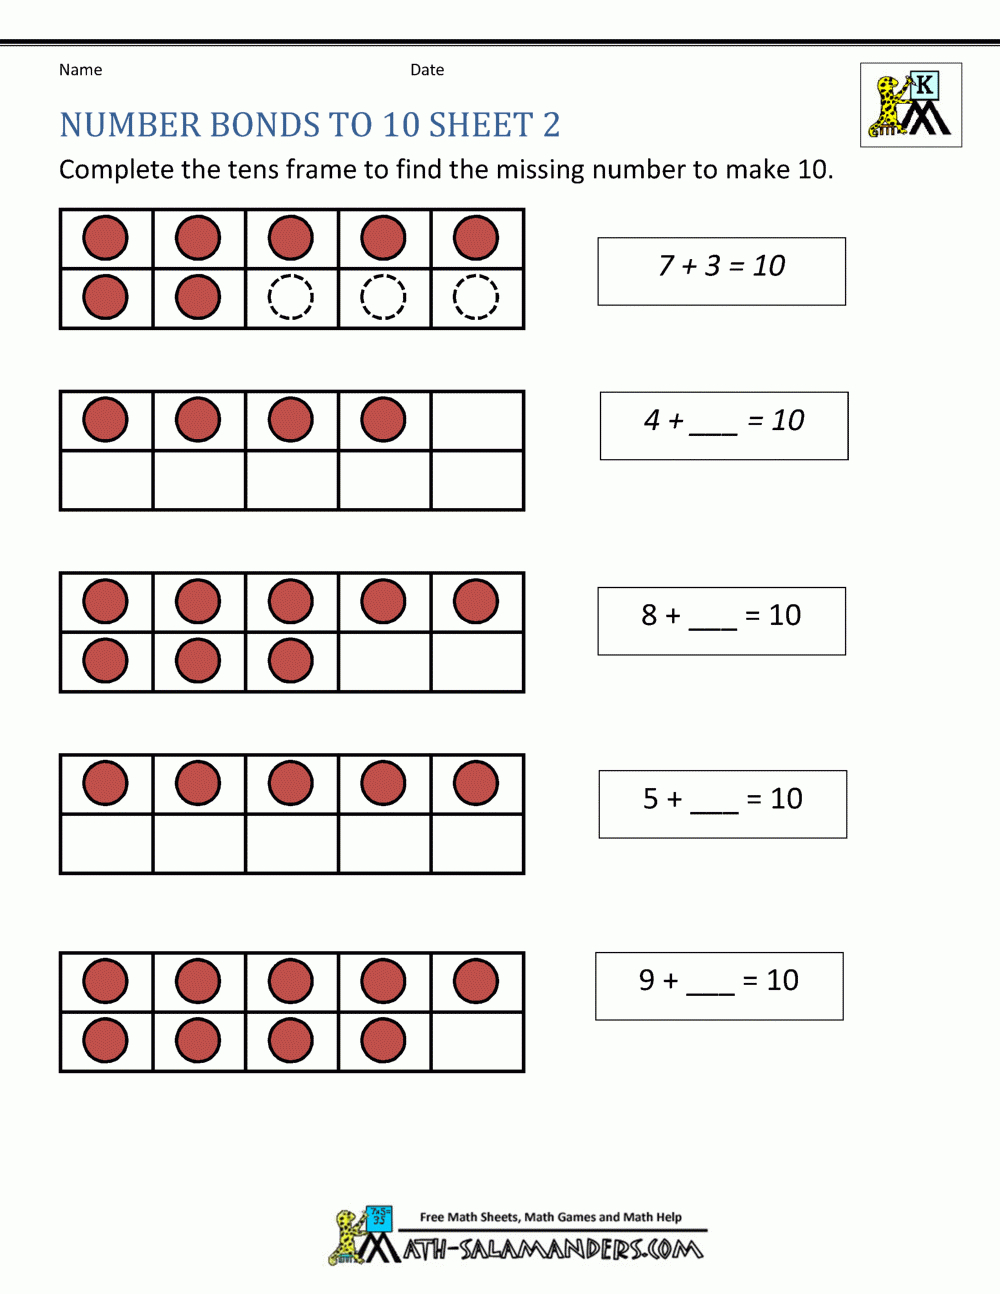 2Nd Grade Math Worksheets Number Bonds To 20 2 Math Activities Printable Number Bond